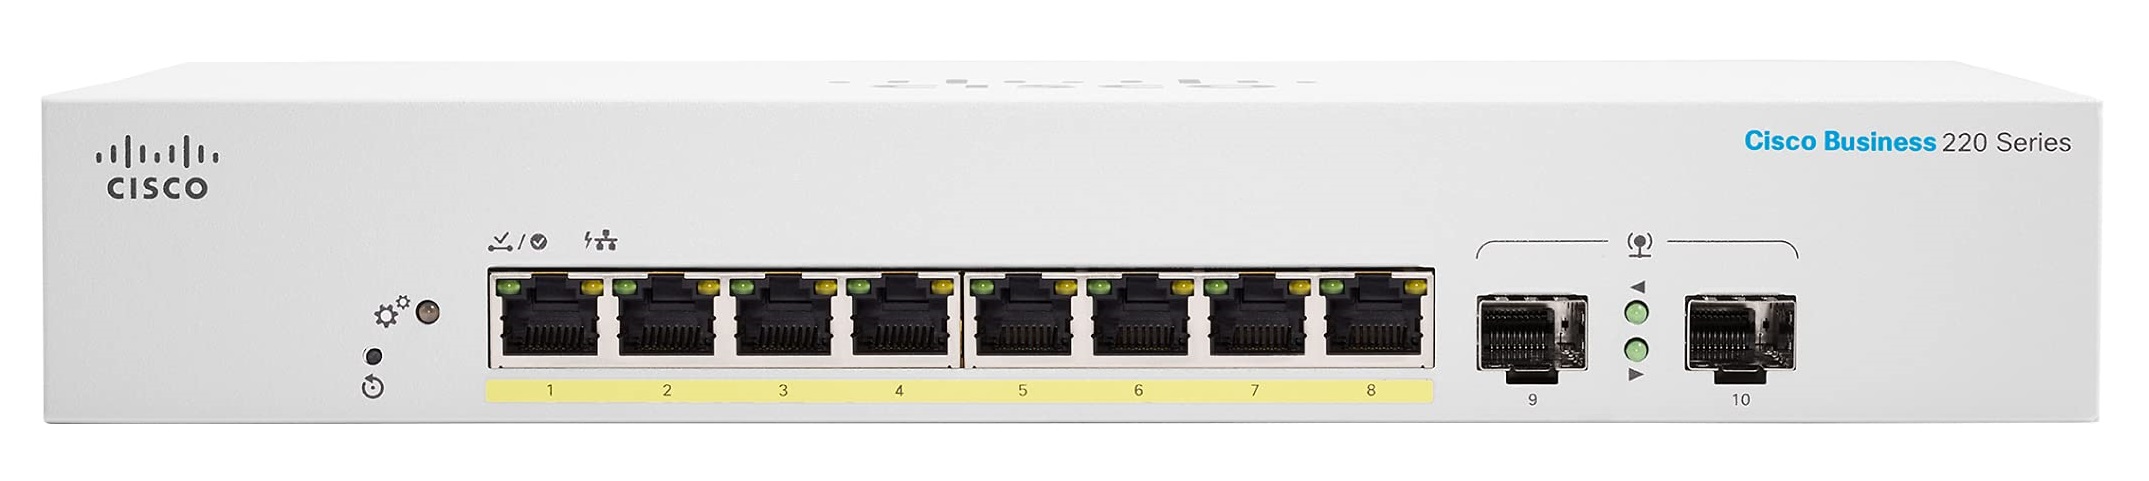 Cisco 8 Giga ports with 130W power budget with 2 Gigabit SFP